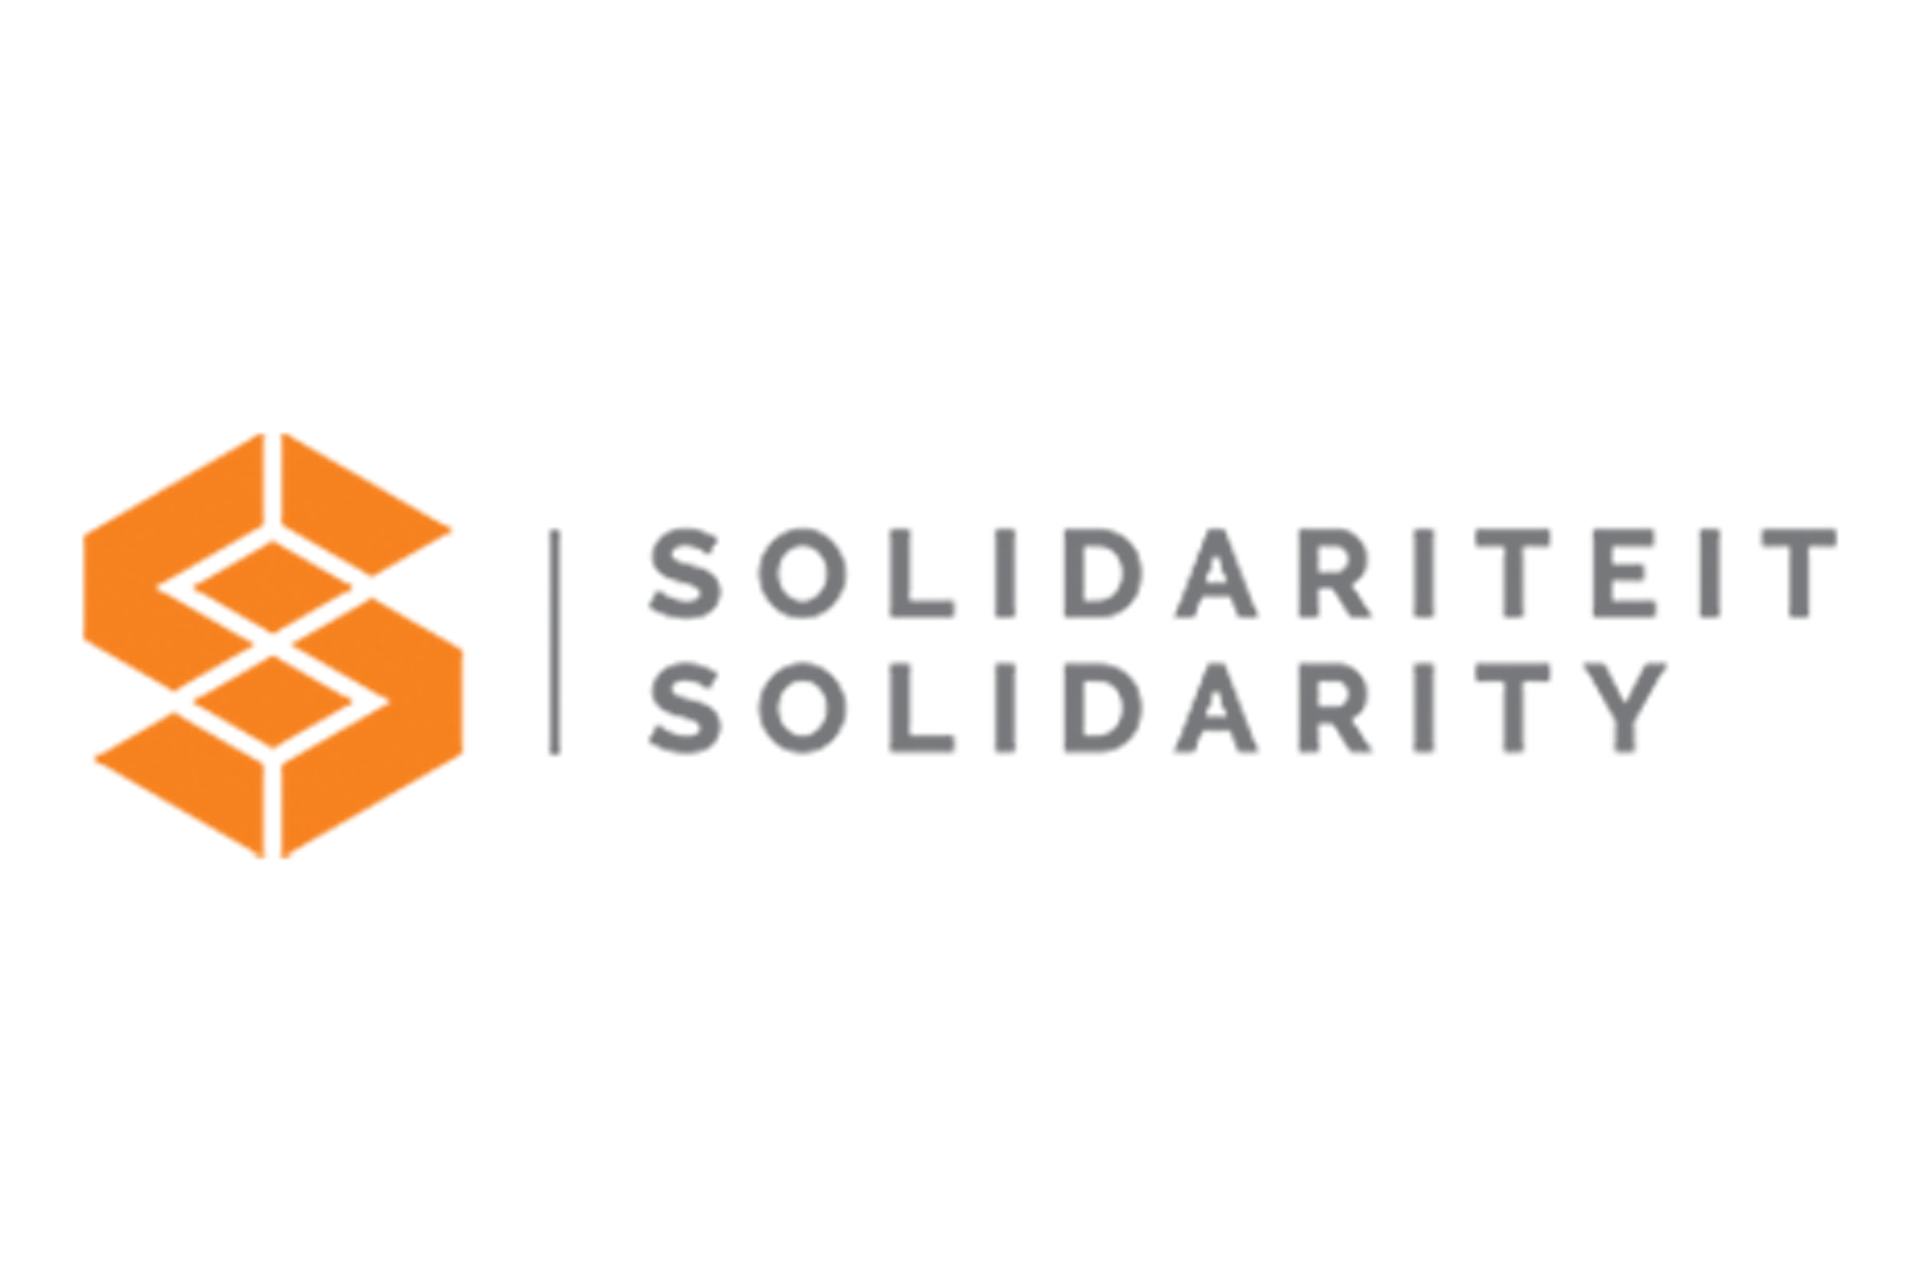 Solidarity/Solidariteit logo